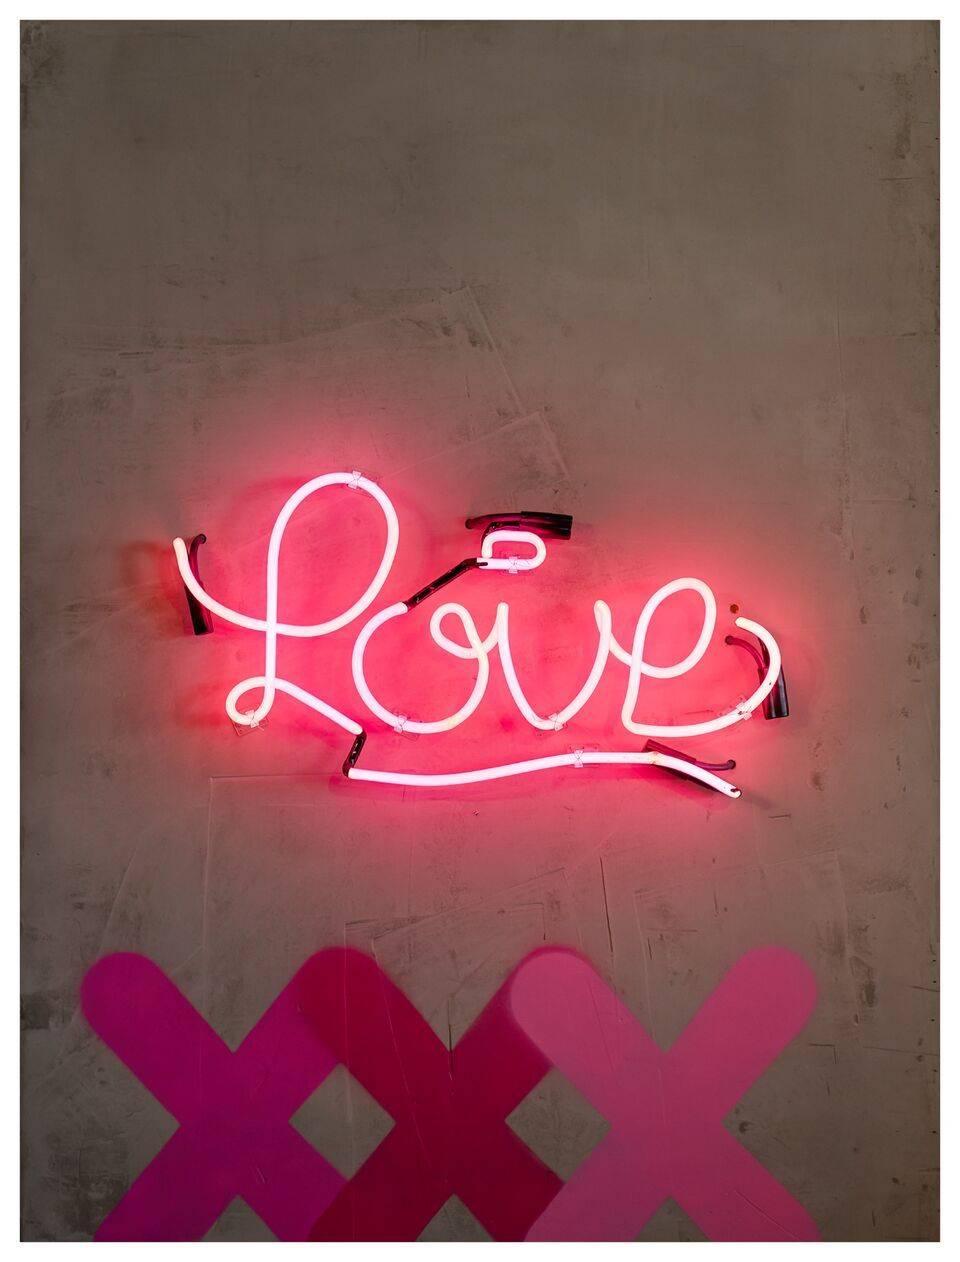 XXXL Love - Original Graffiti Painting - Contemporary - Neon on Wood - Mixed Media Art by Karlos Marquez